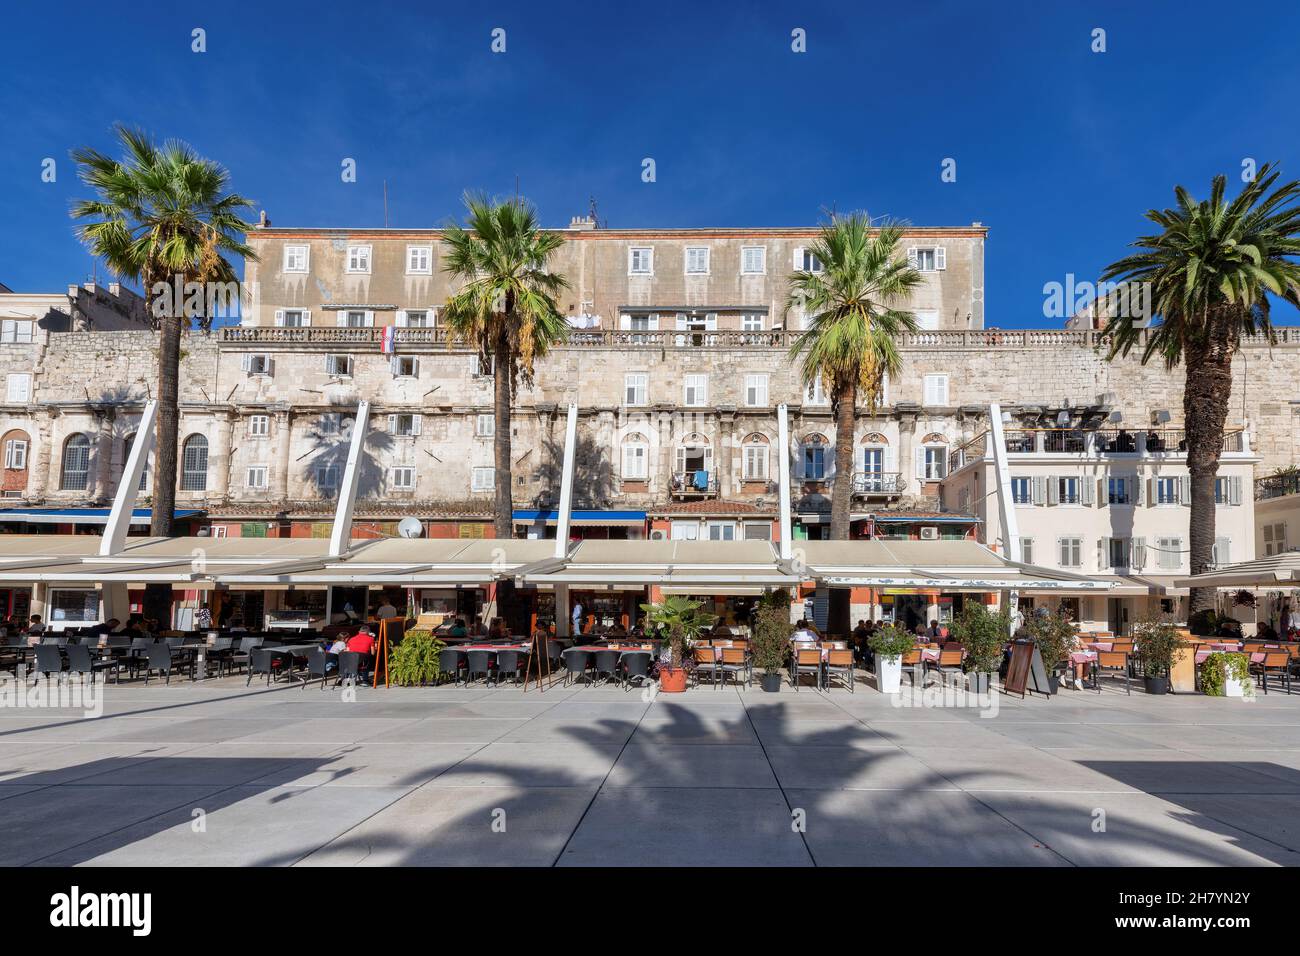 Café and restaurant in Riva promenade, Split, Croatia. Stock Photo